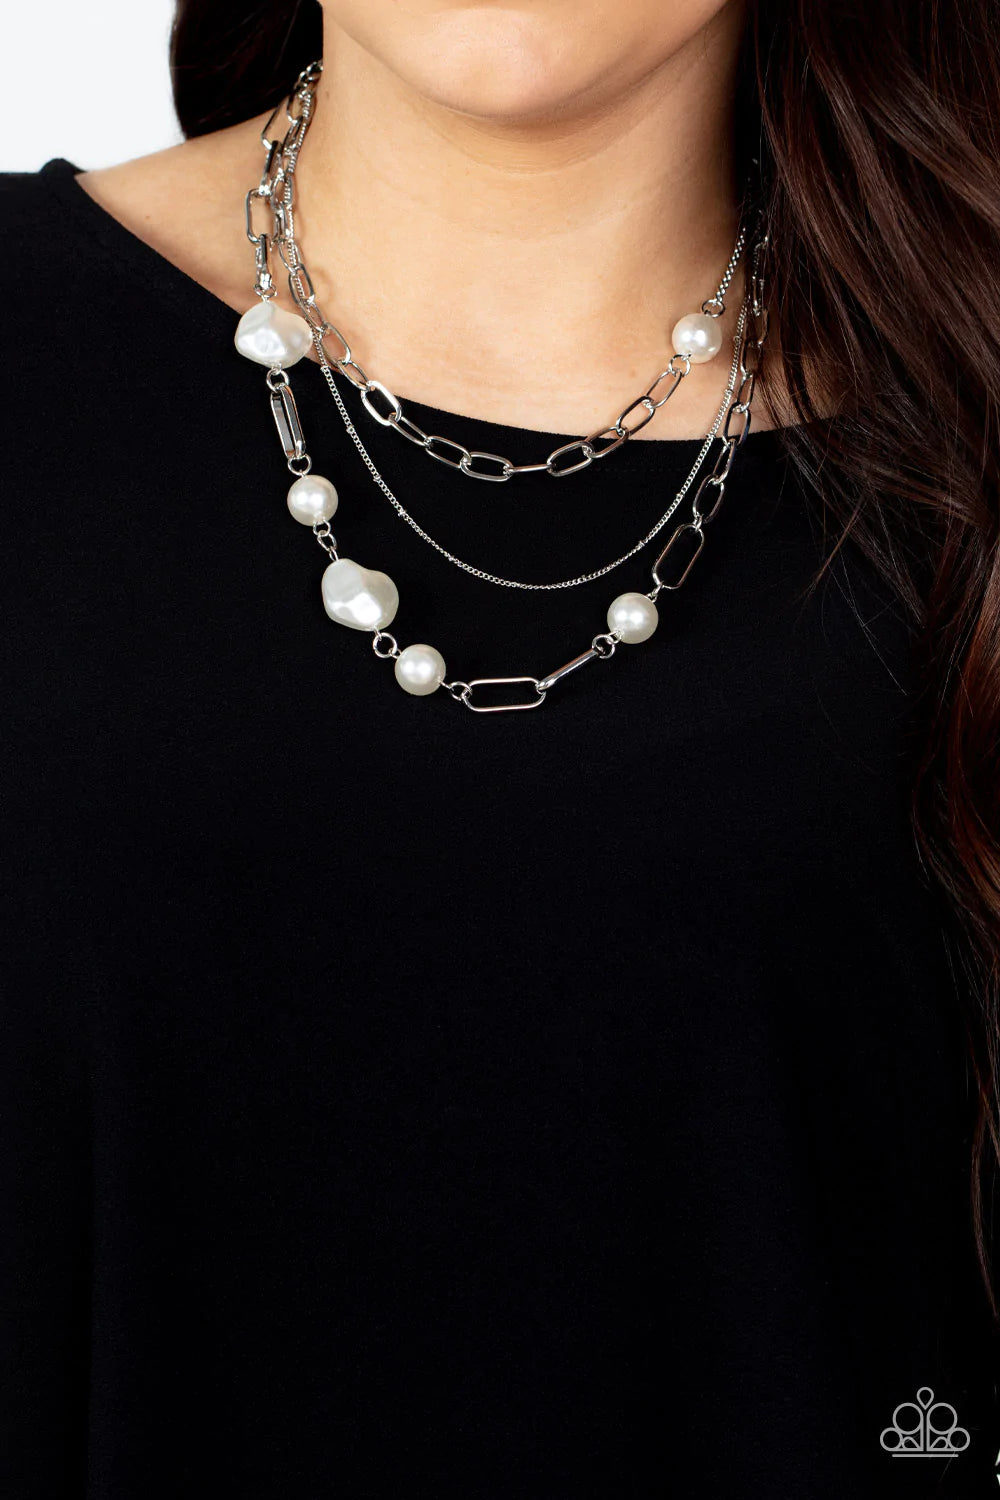 Come CHAIN or Shine - White Necklace - Paparazzi Accessories - March 2023  Fashion Fix | Alies Bling Bar